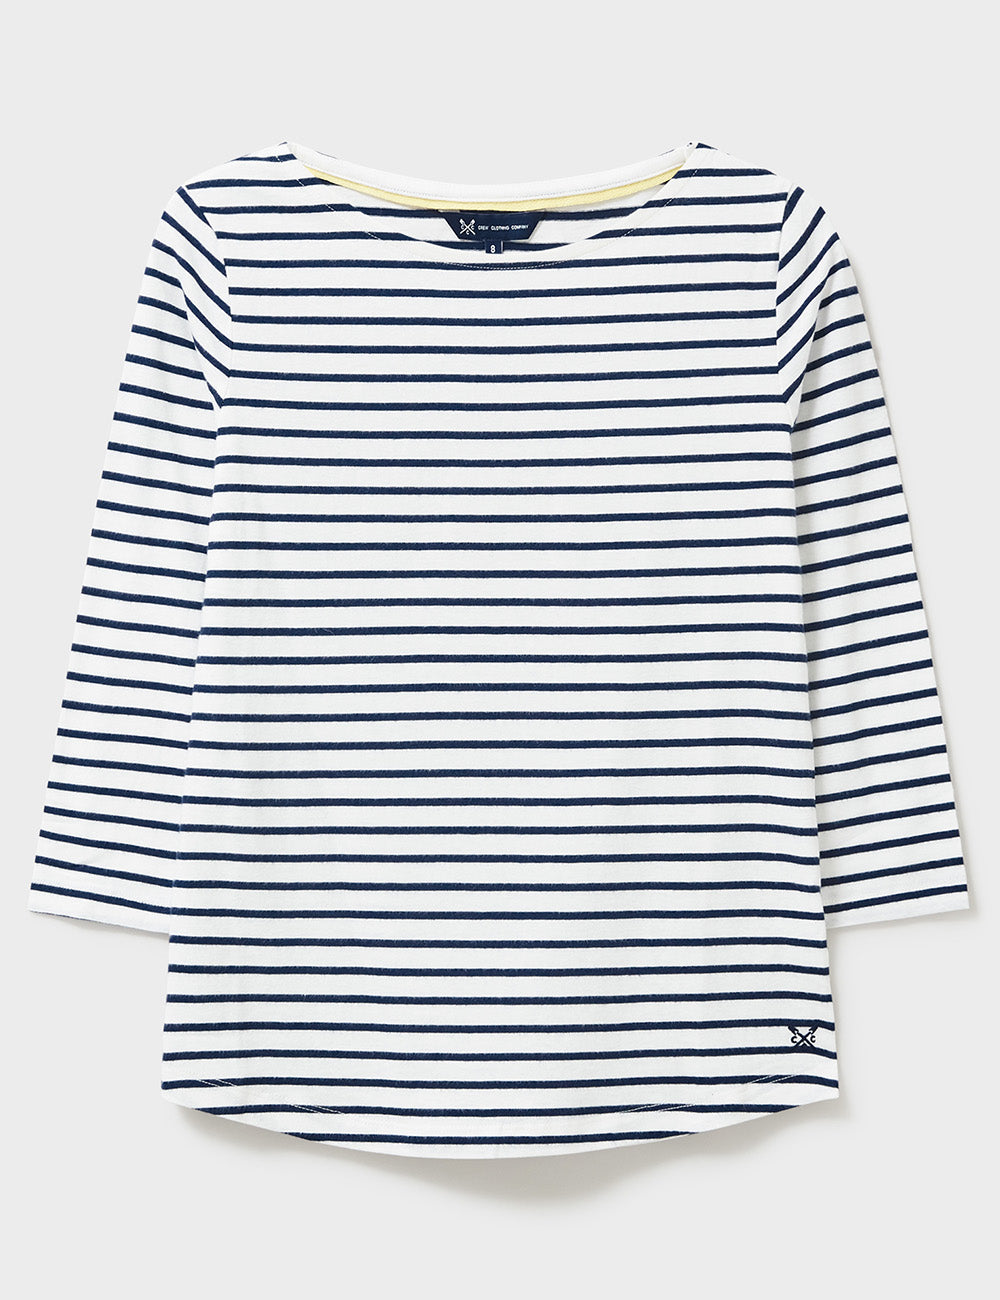 Crew Clothing Essential Breton T-Shirt - White/Navy